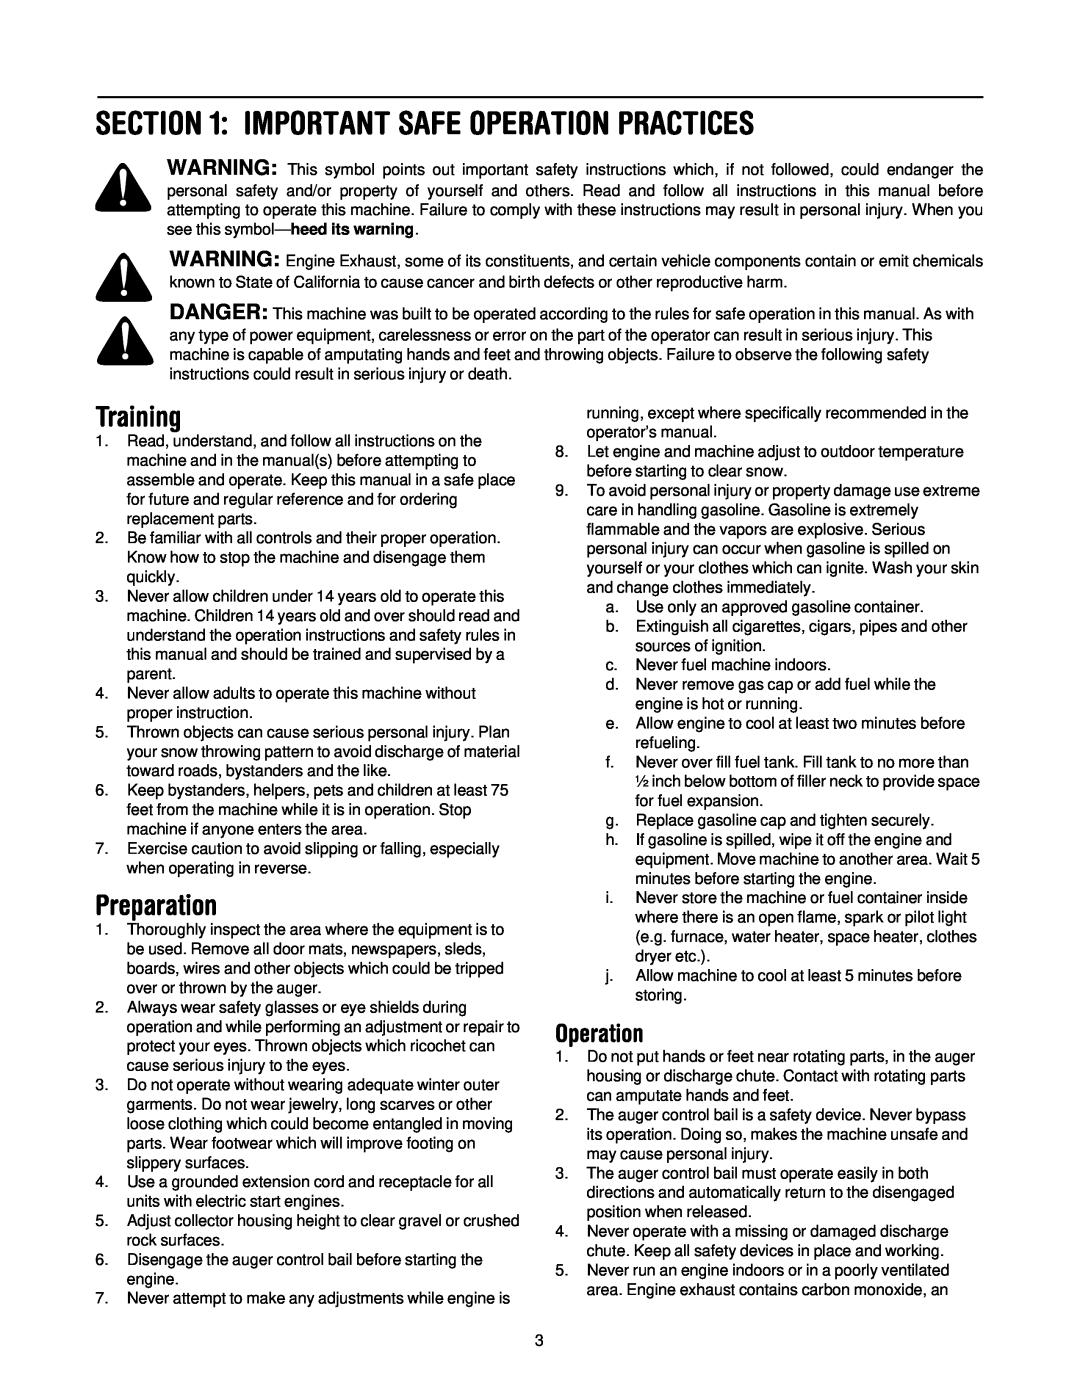 MTD E295, E2B5 manual Important Safe Operation Practices, Training, Preparation 